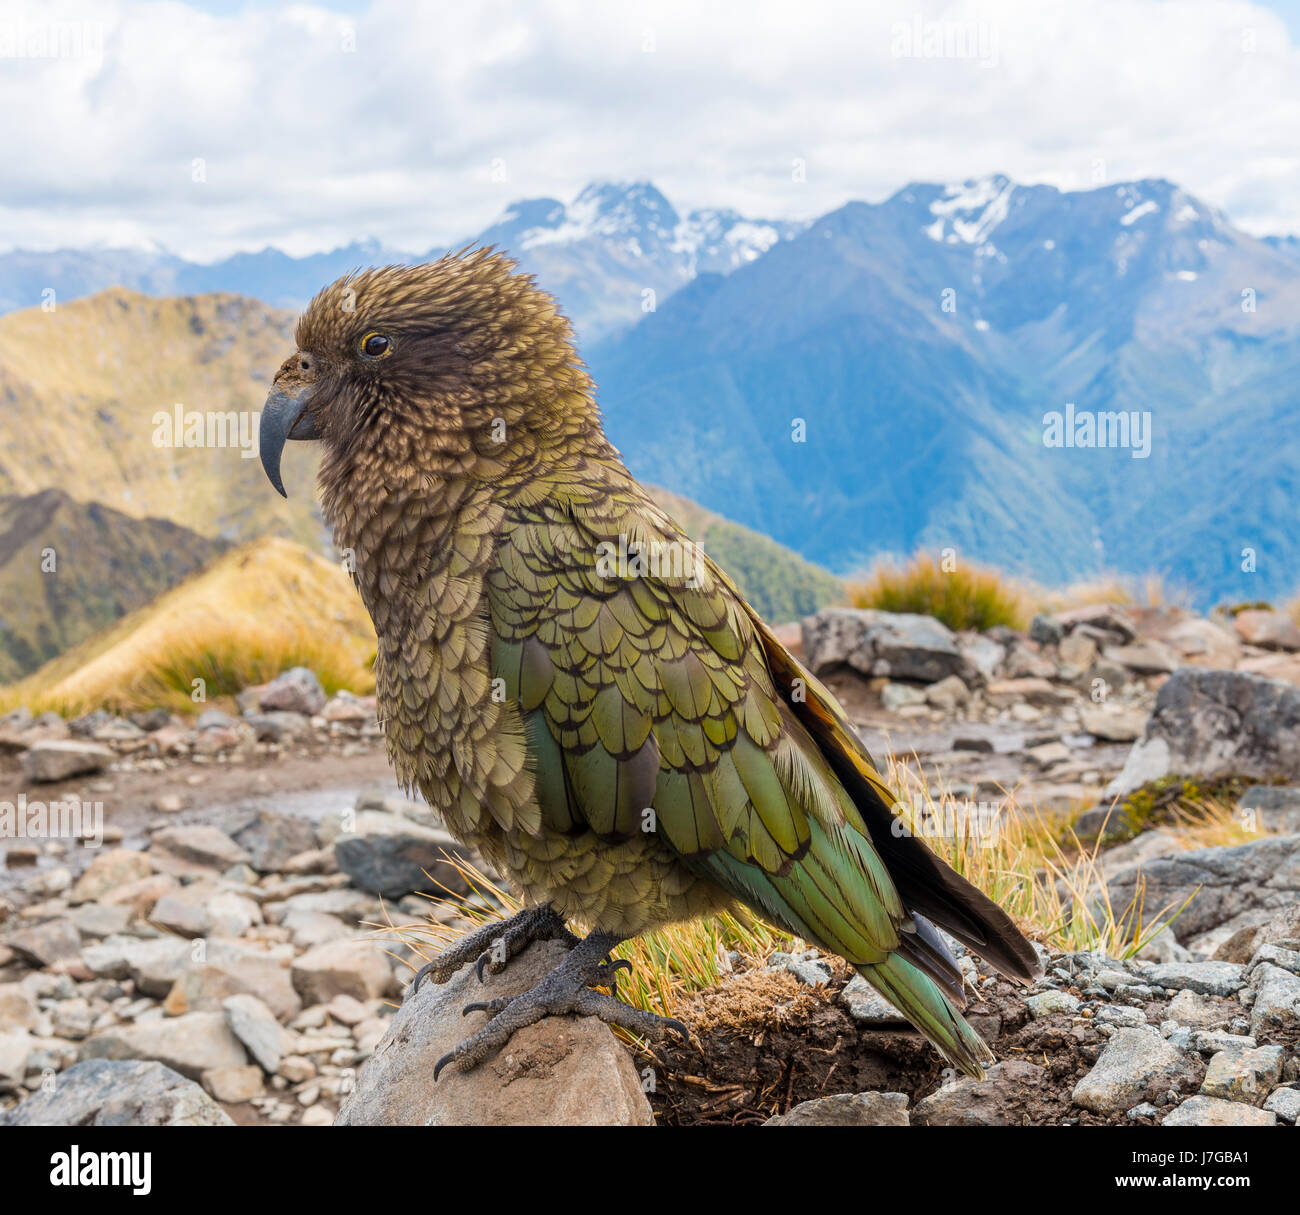 Ansichtskarte: im Schnee Kea New Zealand Mountain Parrot in snow Bergpapagei 